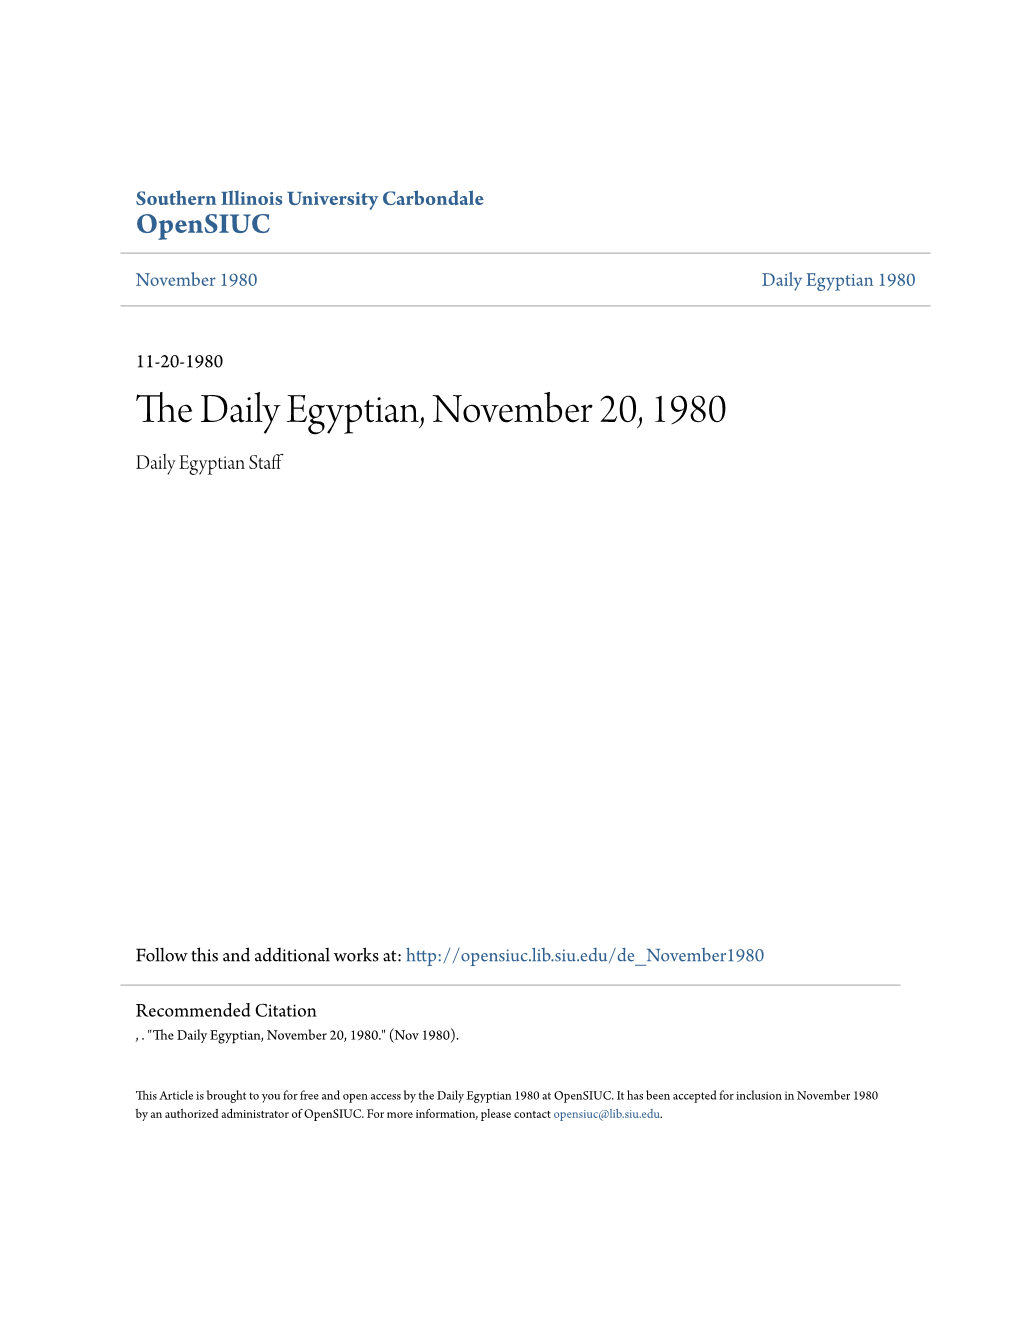 The Daily Egyptian, November 20, 1980